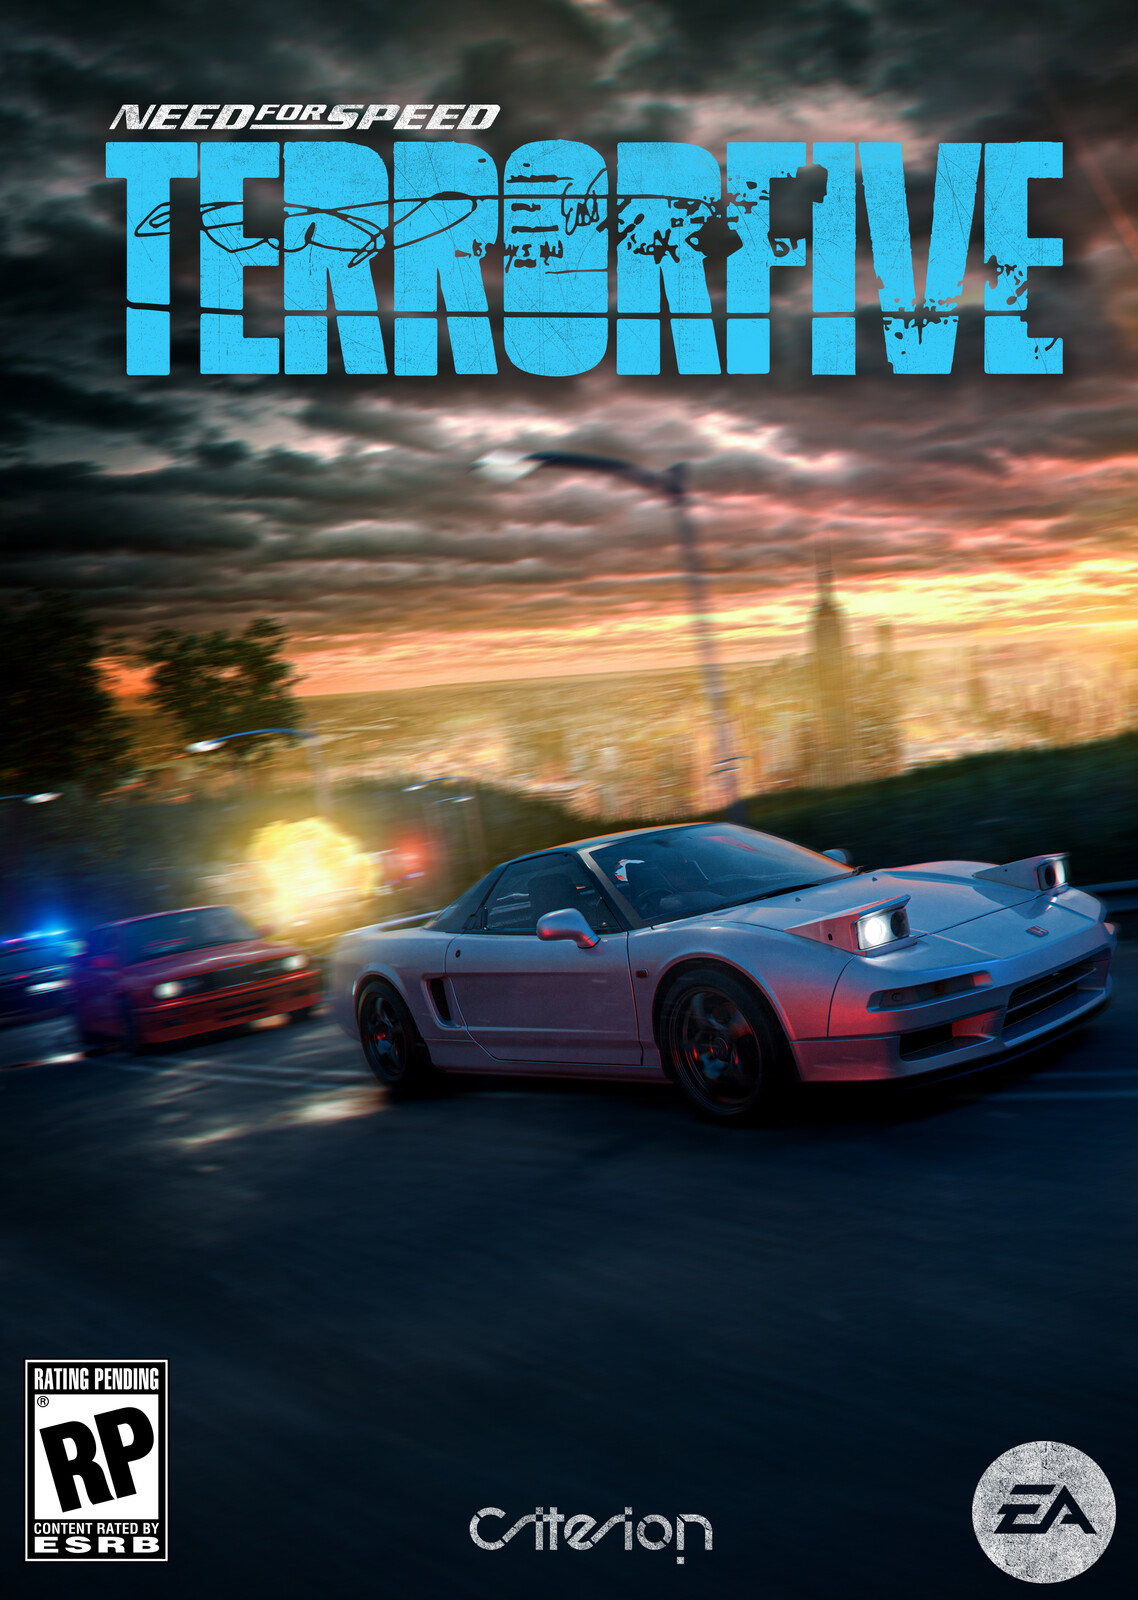 Need for Speed Terrorfive (Original image by @Darudnik)